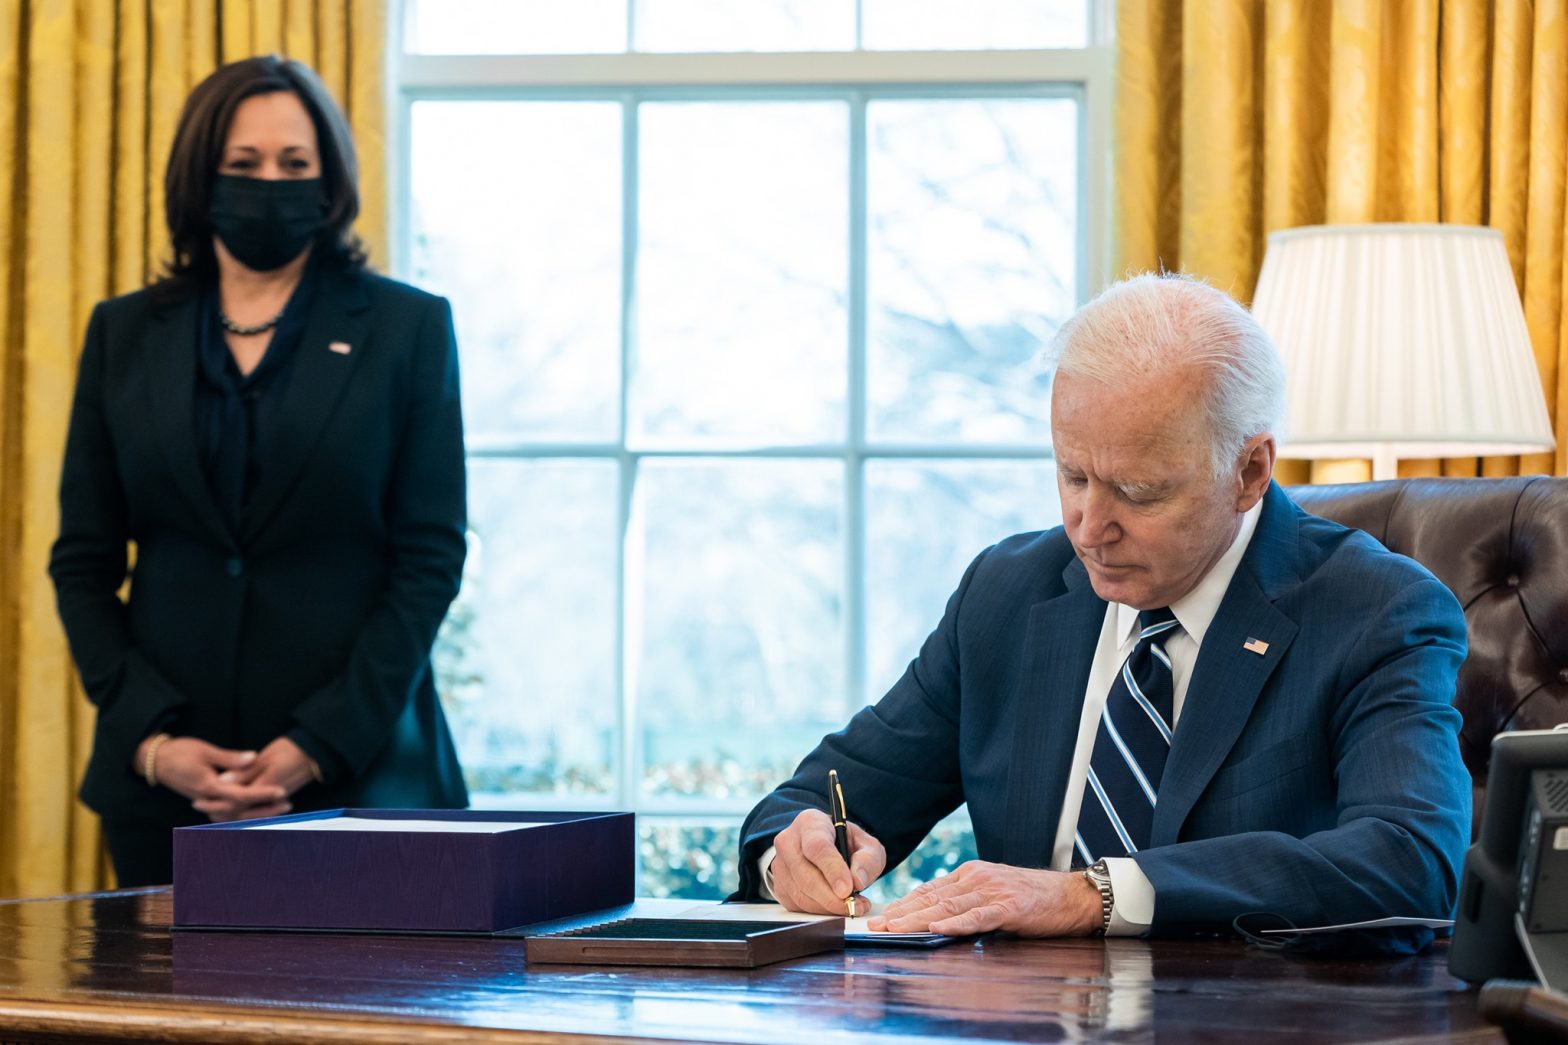 President Joe Biden signs the American Rescue Plan